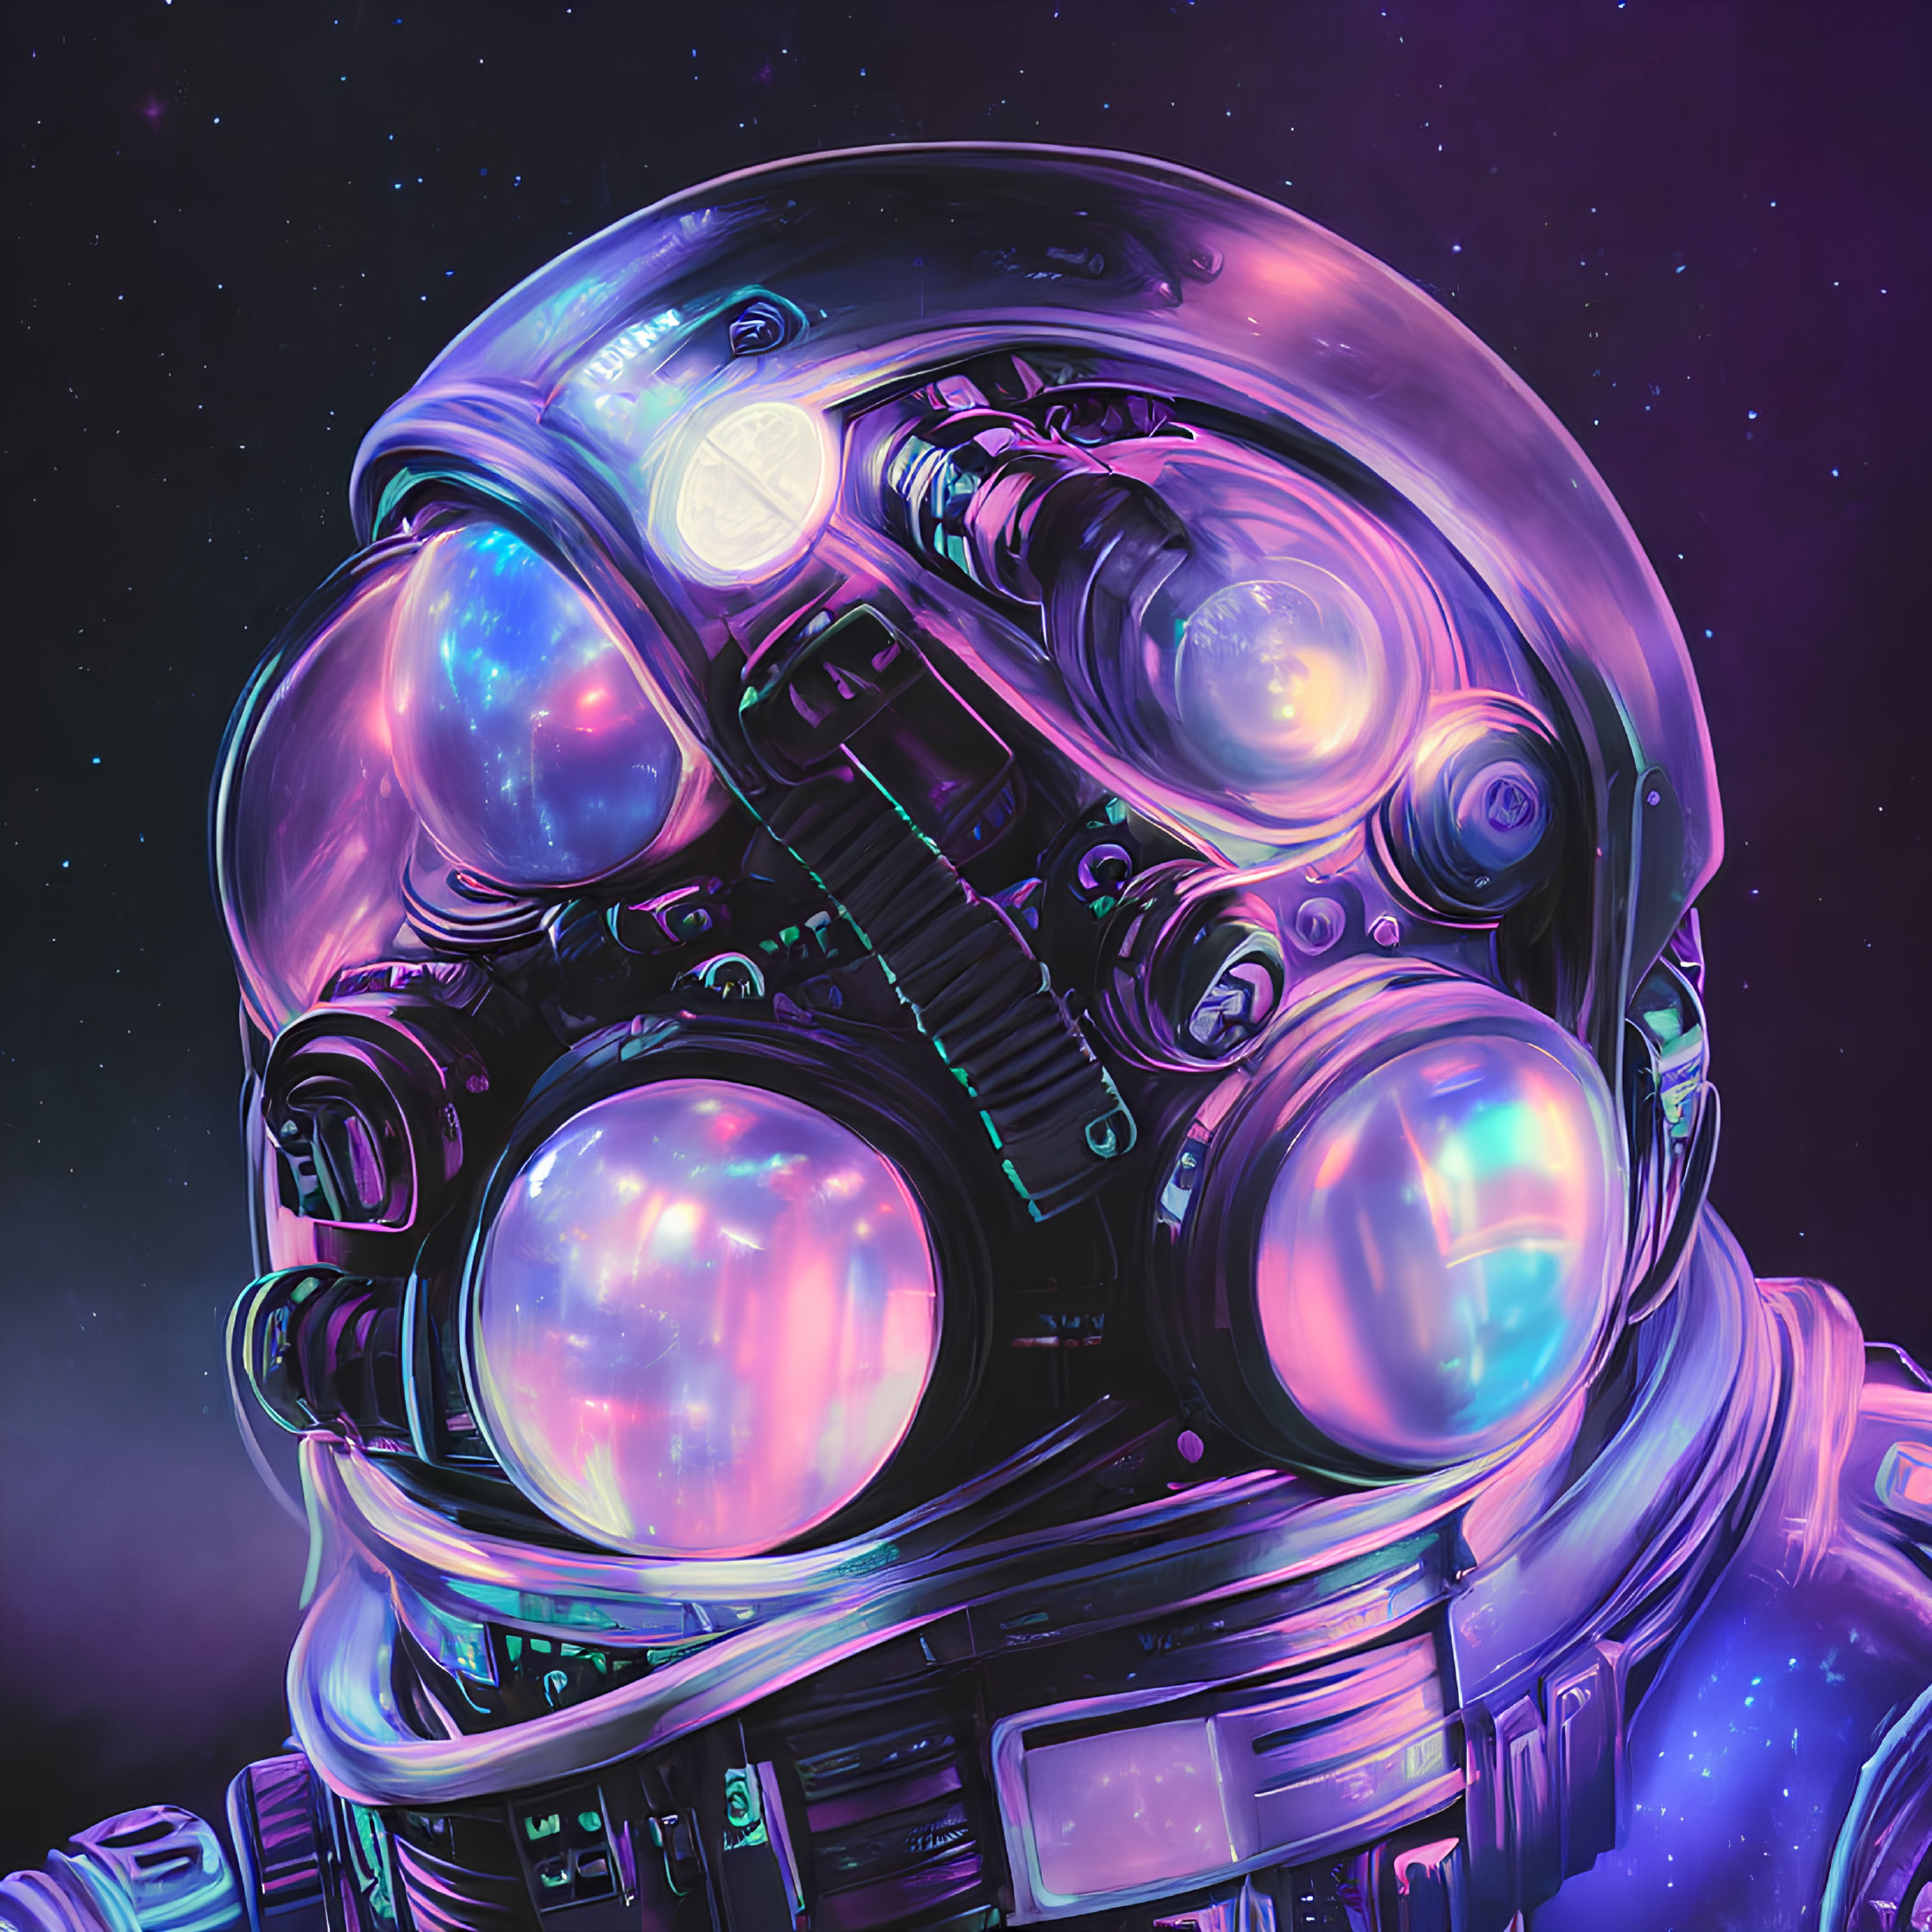 Astronaut in reflective helmet against starry cosmos